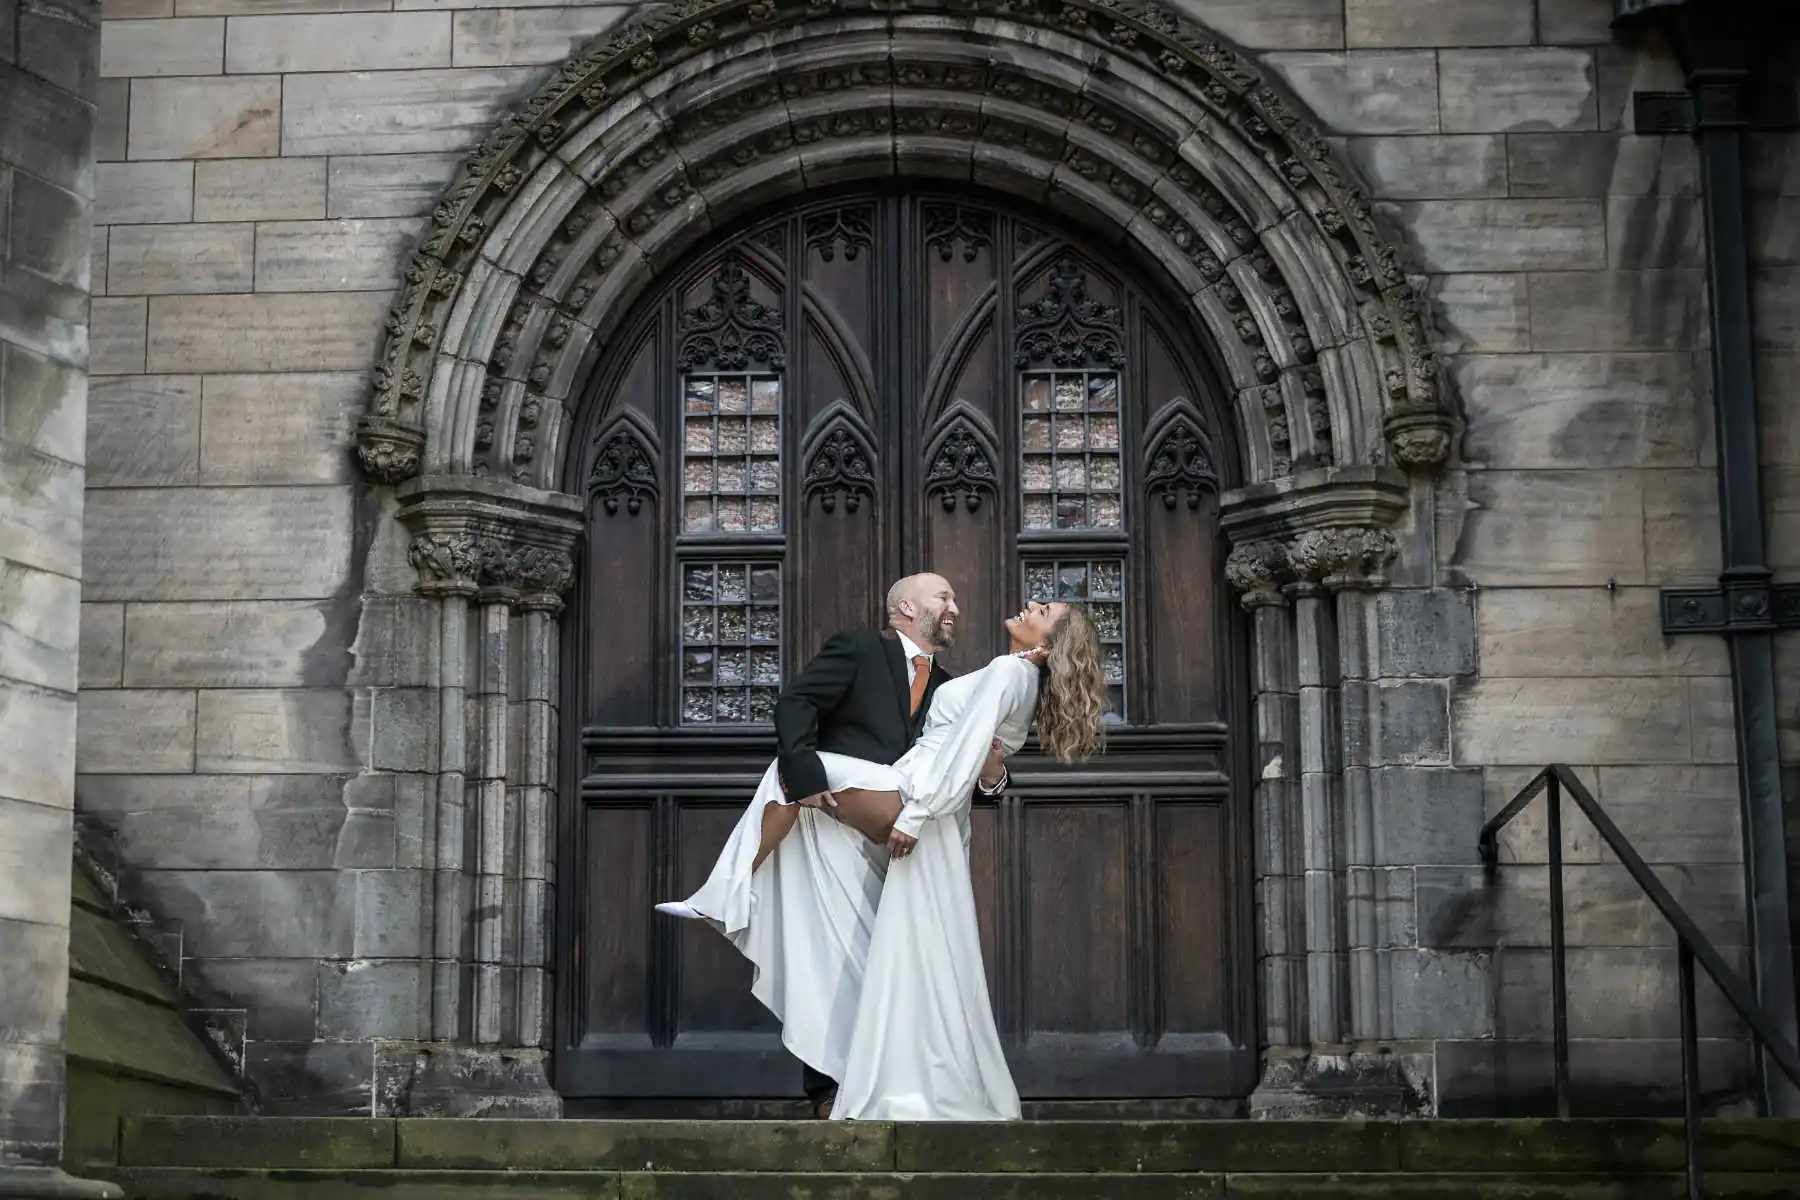 St Giles' Cathedral Edinburgh Scotland - newlyweds Sara and Carl, married at Edinburgh City Chambers Registry Office